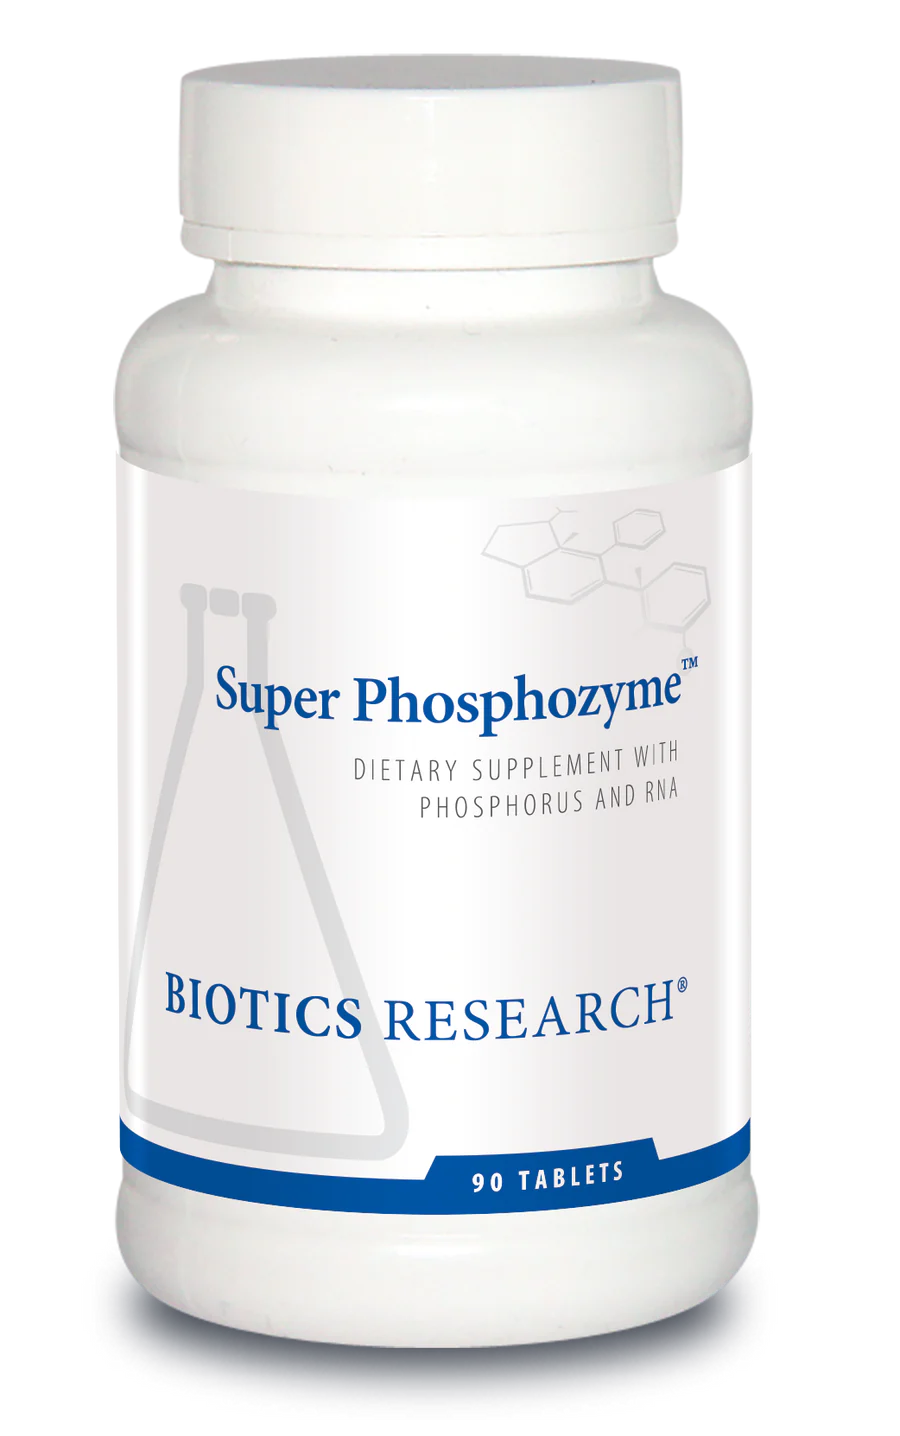 Super Phosphozyme tablets